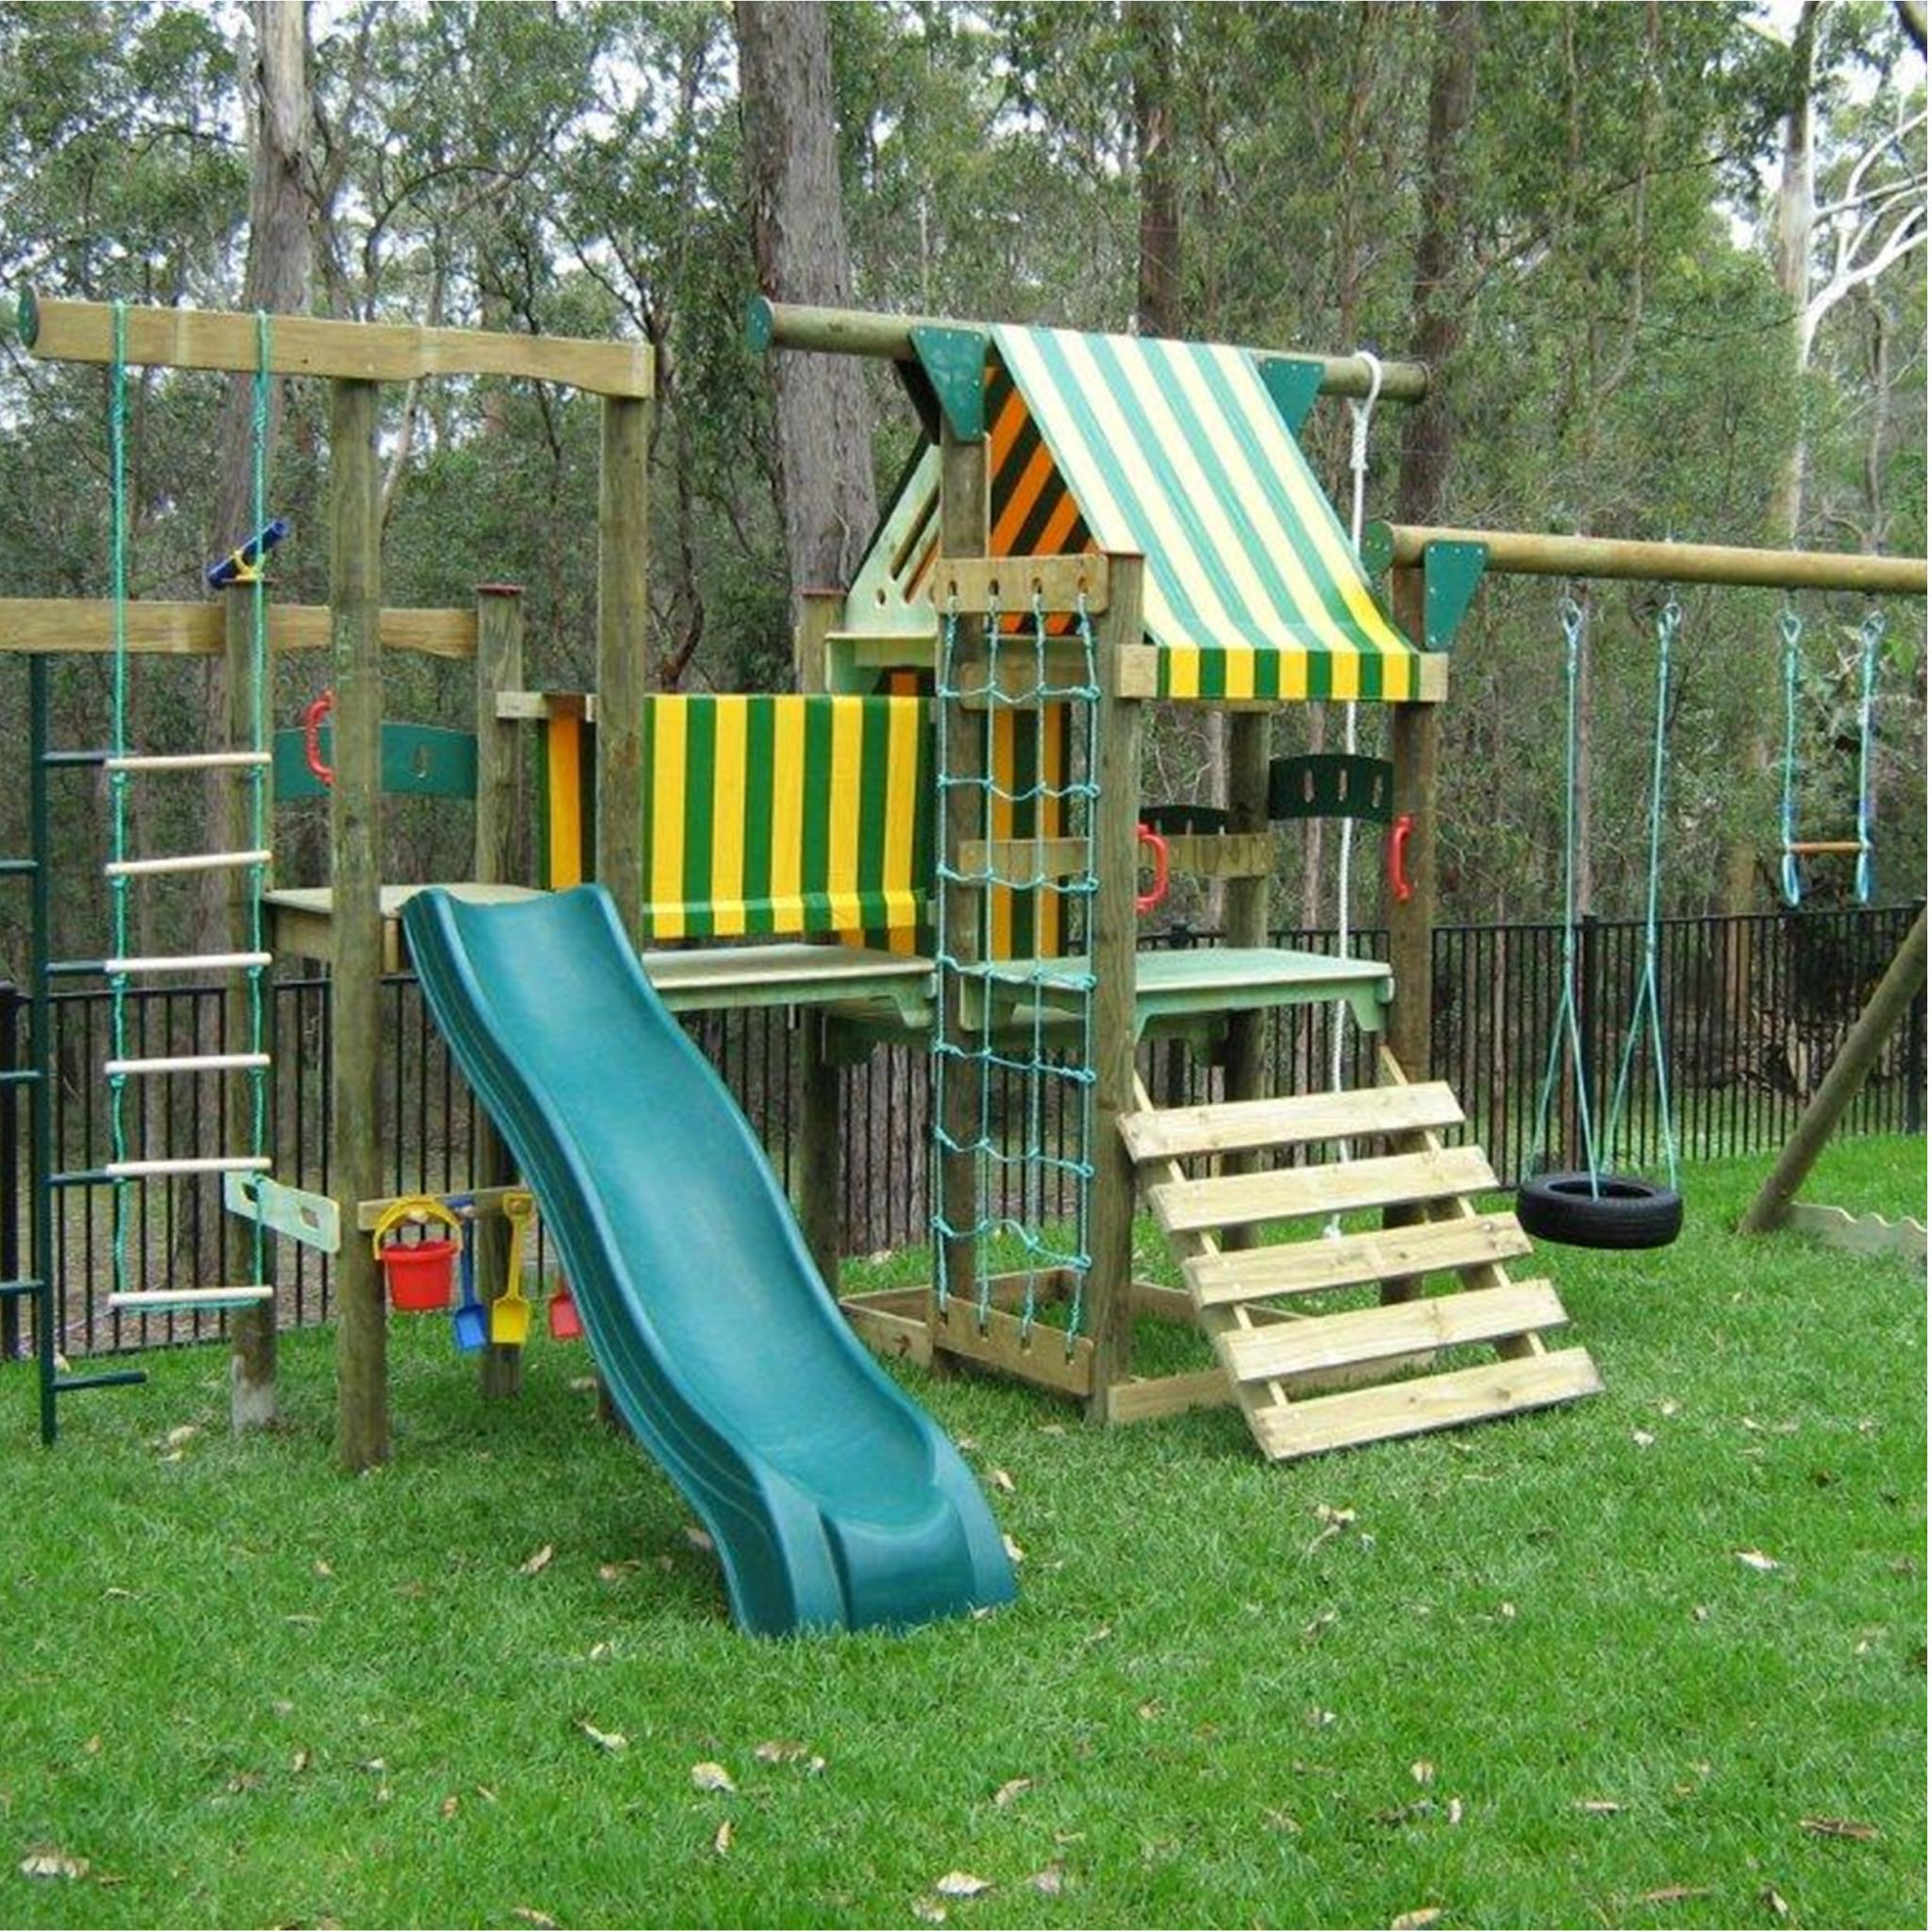 Best ideas about Backyard Playground Equipment
. Save or Pin Best Backyard Play Equipment the Gold Coast Now.